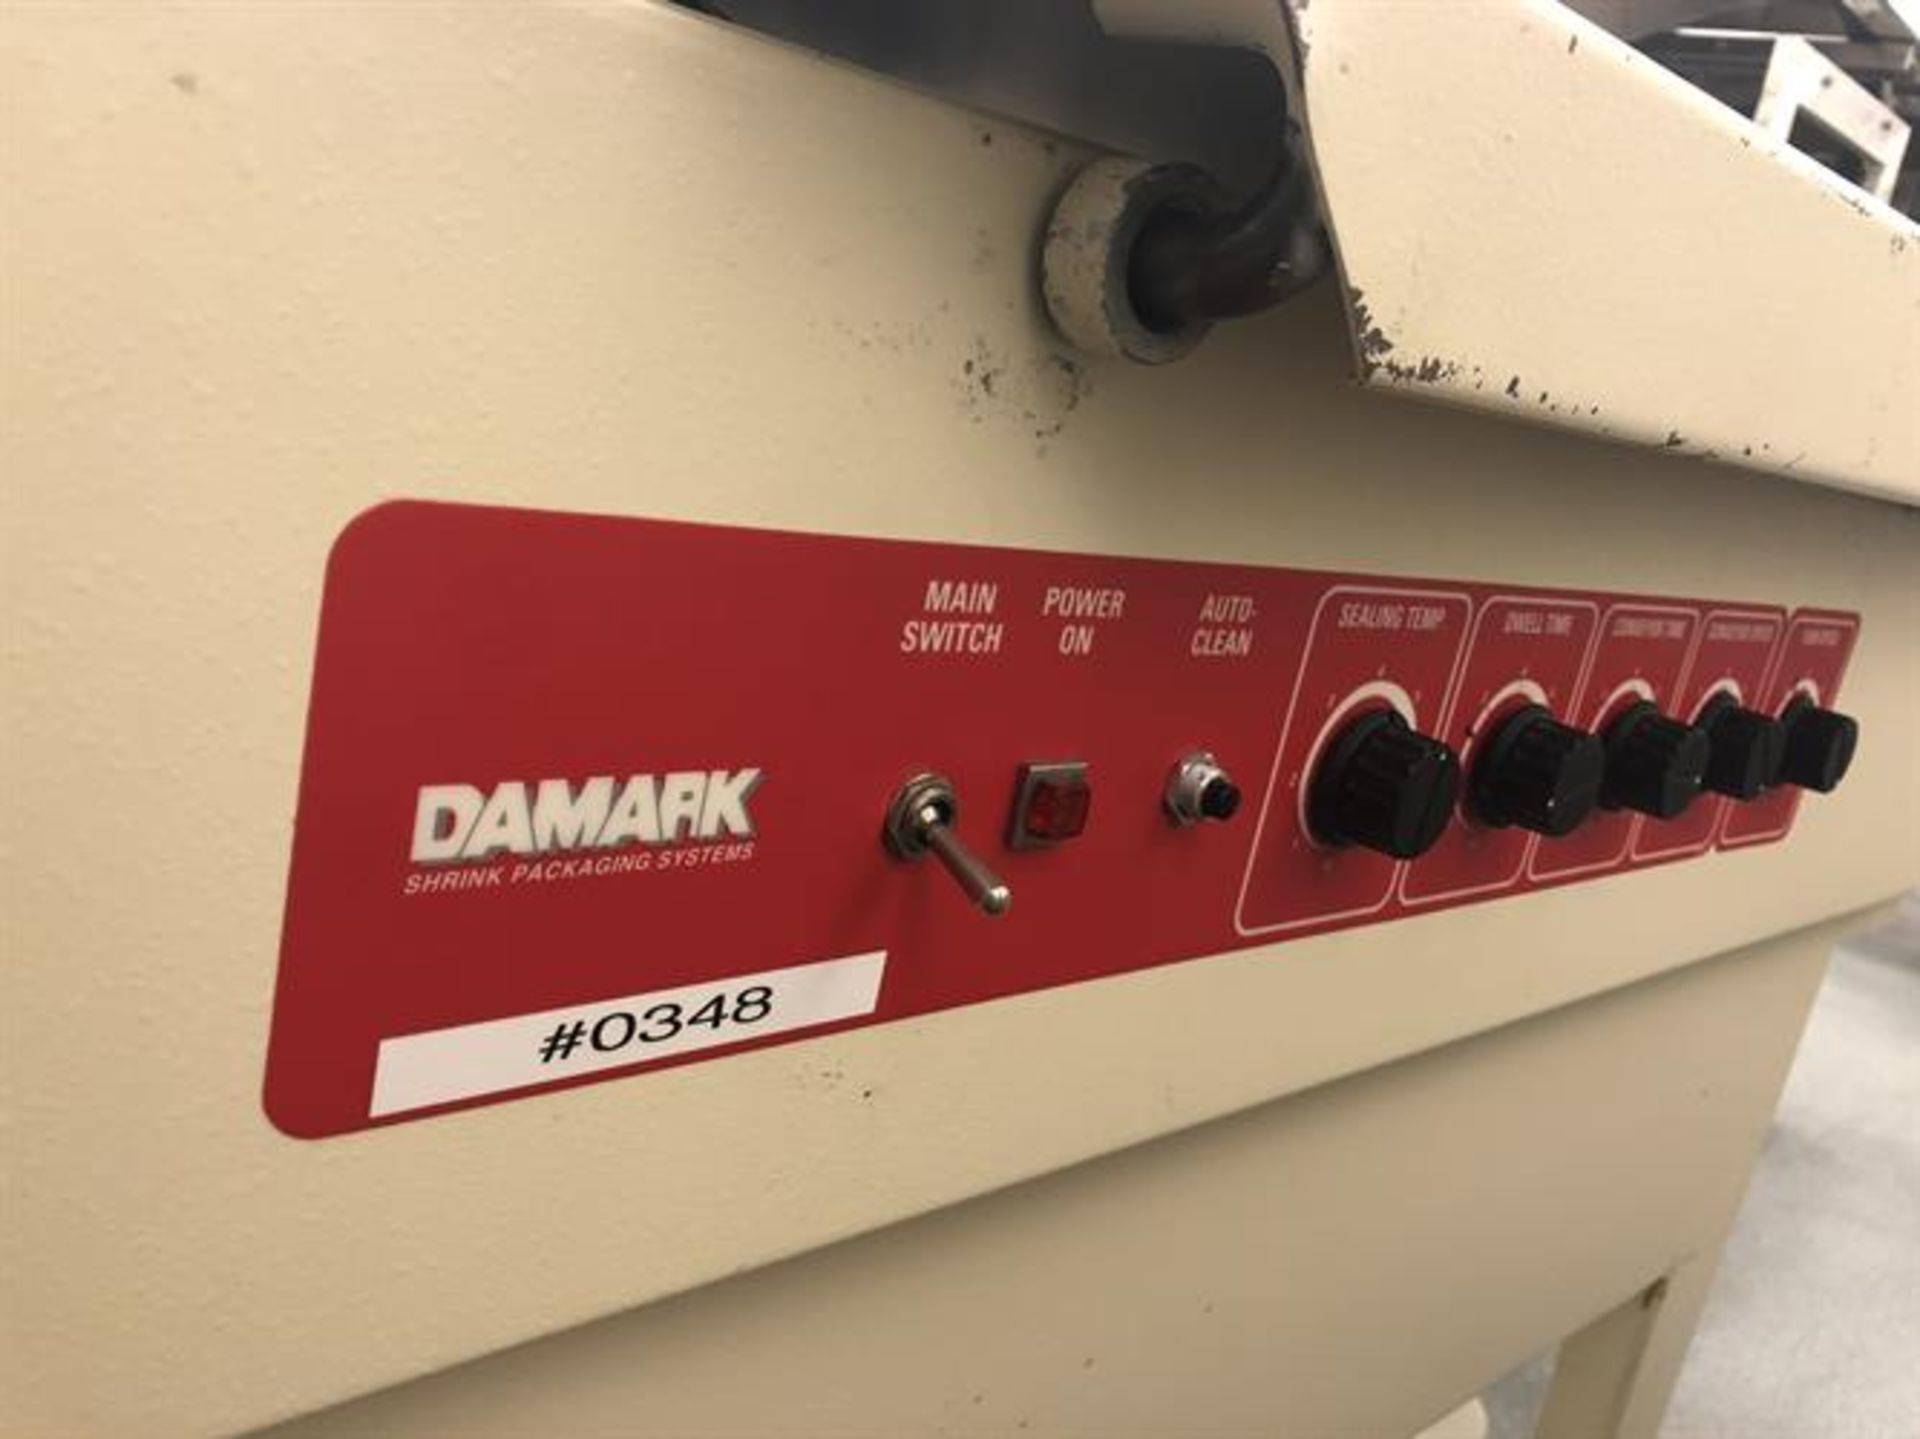 Damark model SMC 2228 L-Bar Sealer - 22" x 28" sealing area - Timers and controls - Take away belt - Image 3 of 5